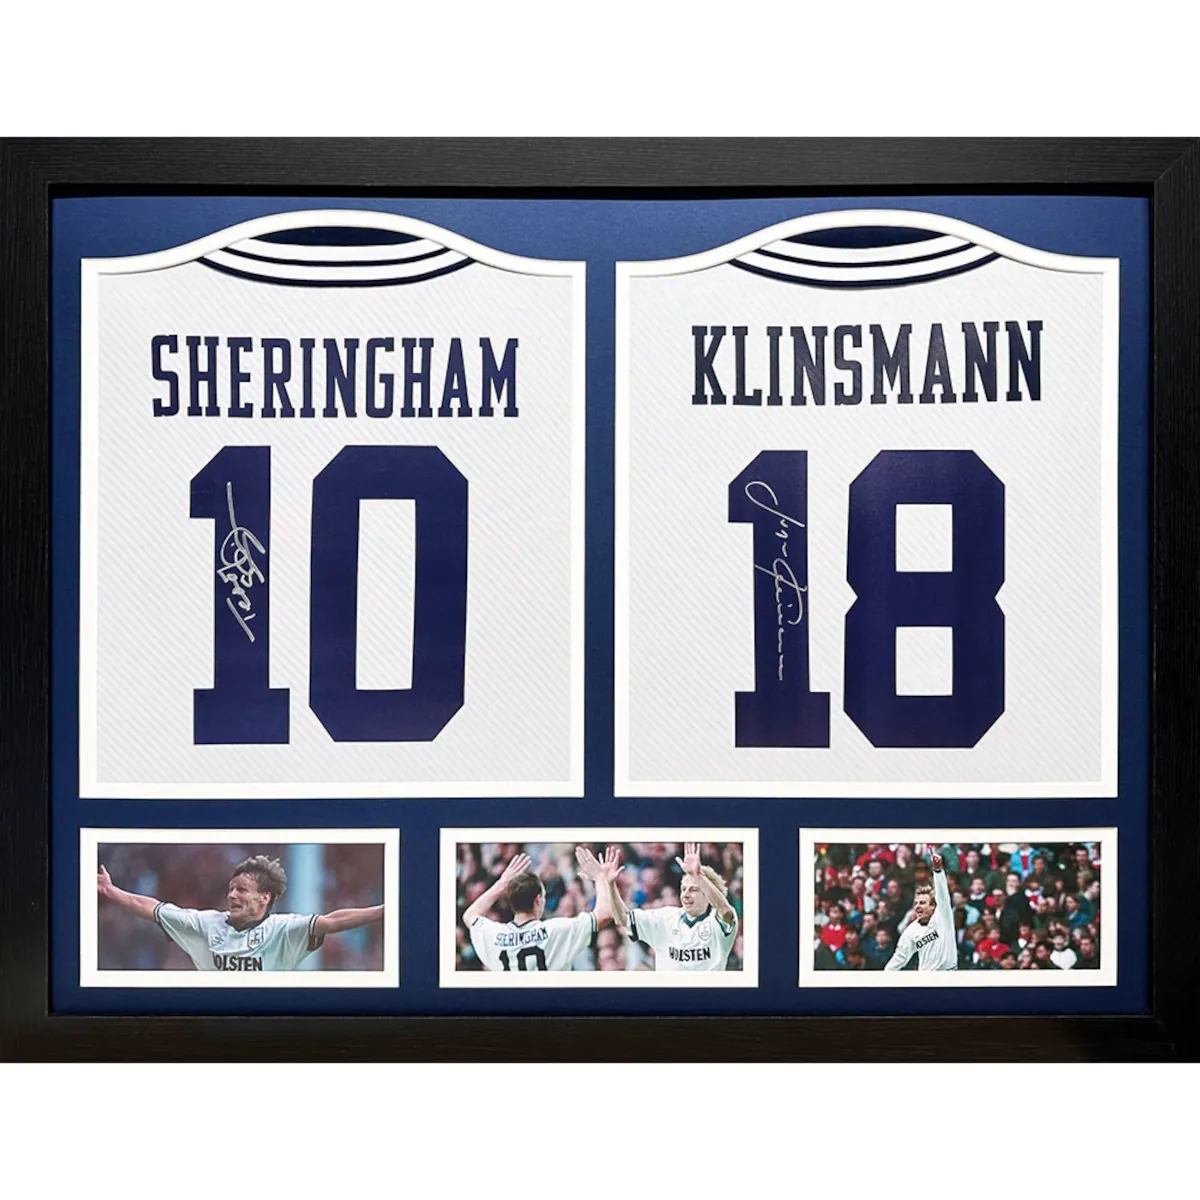 TM-02730 Tottenham Hotspur F.C. Sheringham & Klinsmann Dual Framed Signed 1994 Replica Football Shirts